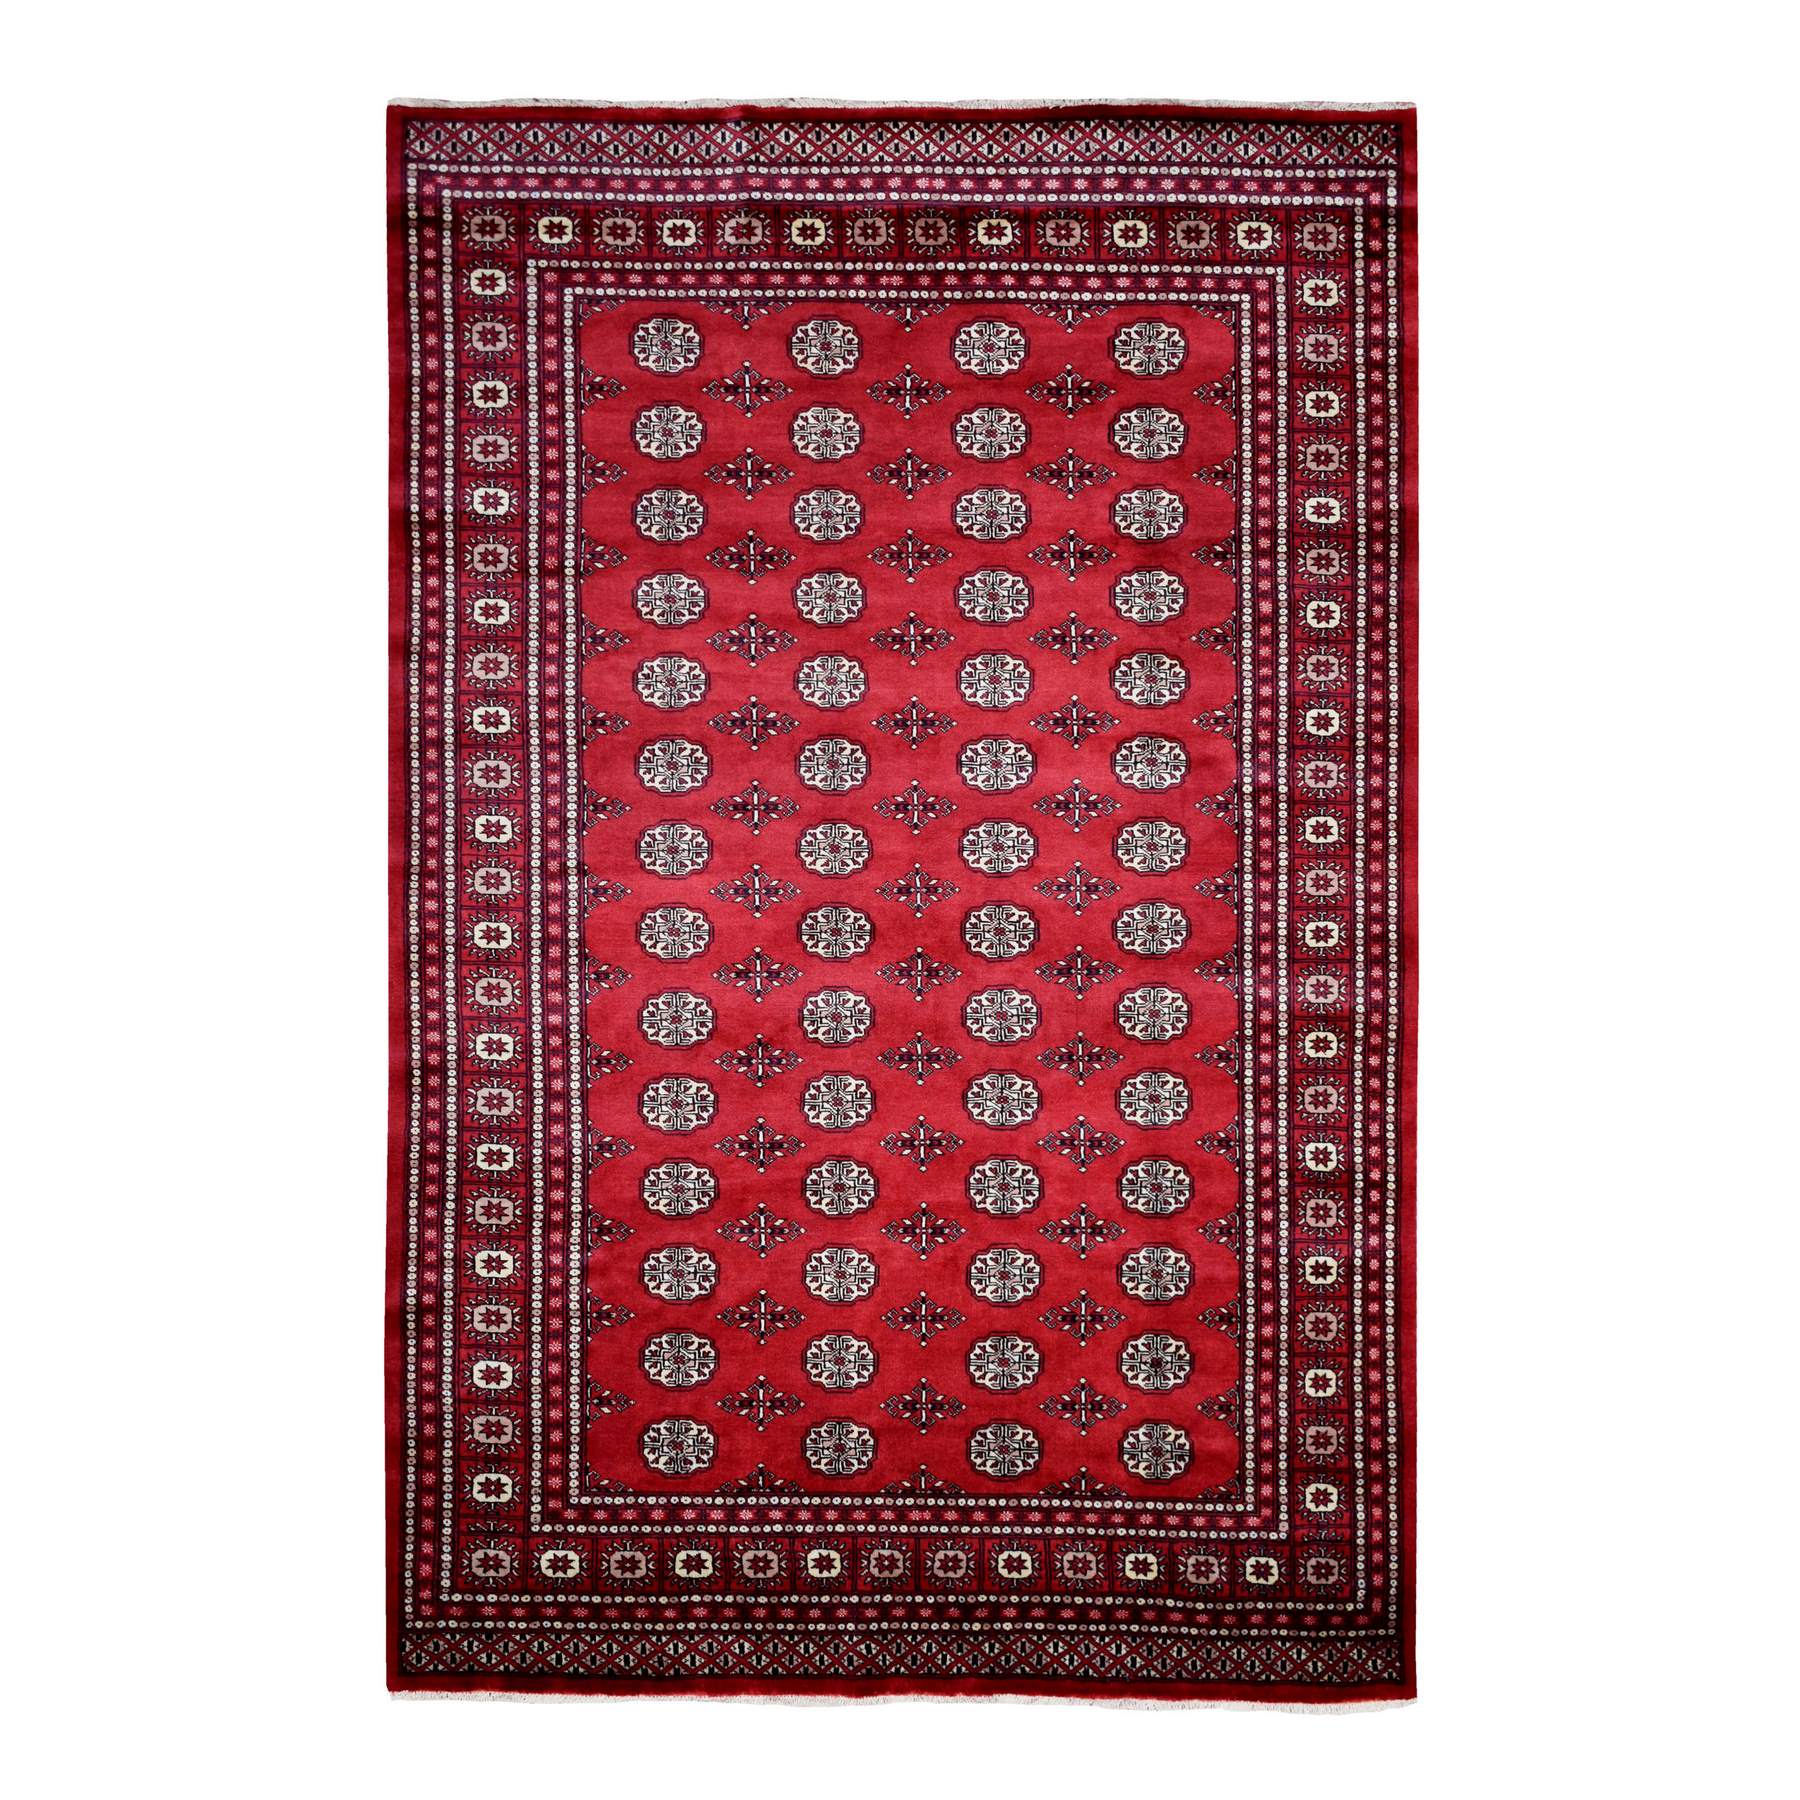 6'x9'3" Deep and Rich Red Soft Wool Hand Woven Mori Bokara with Geometric Medallions Design Oriental Rug 